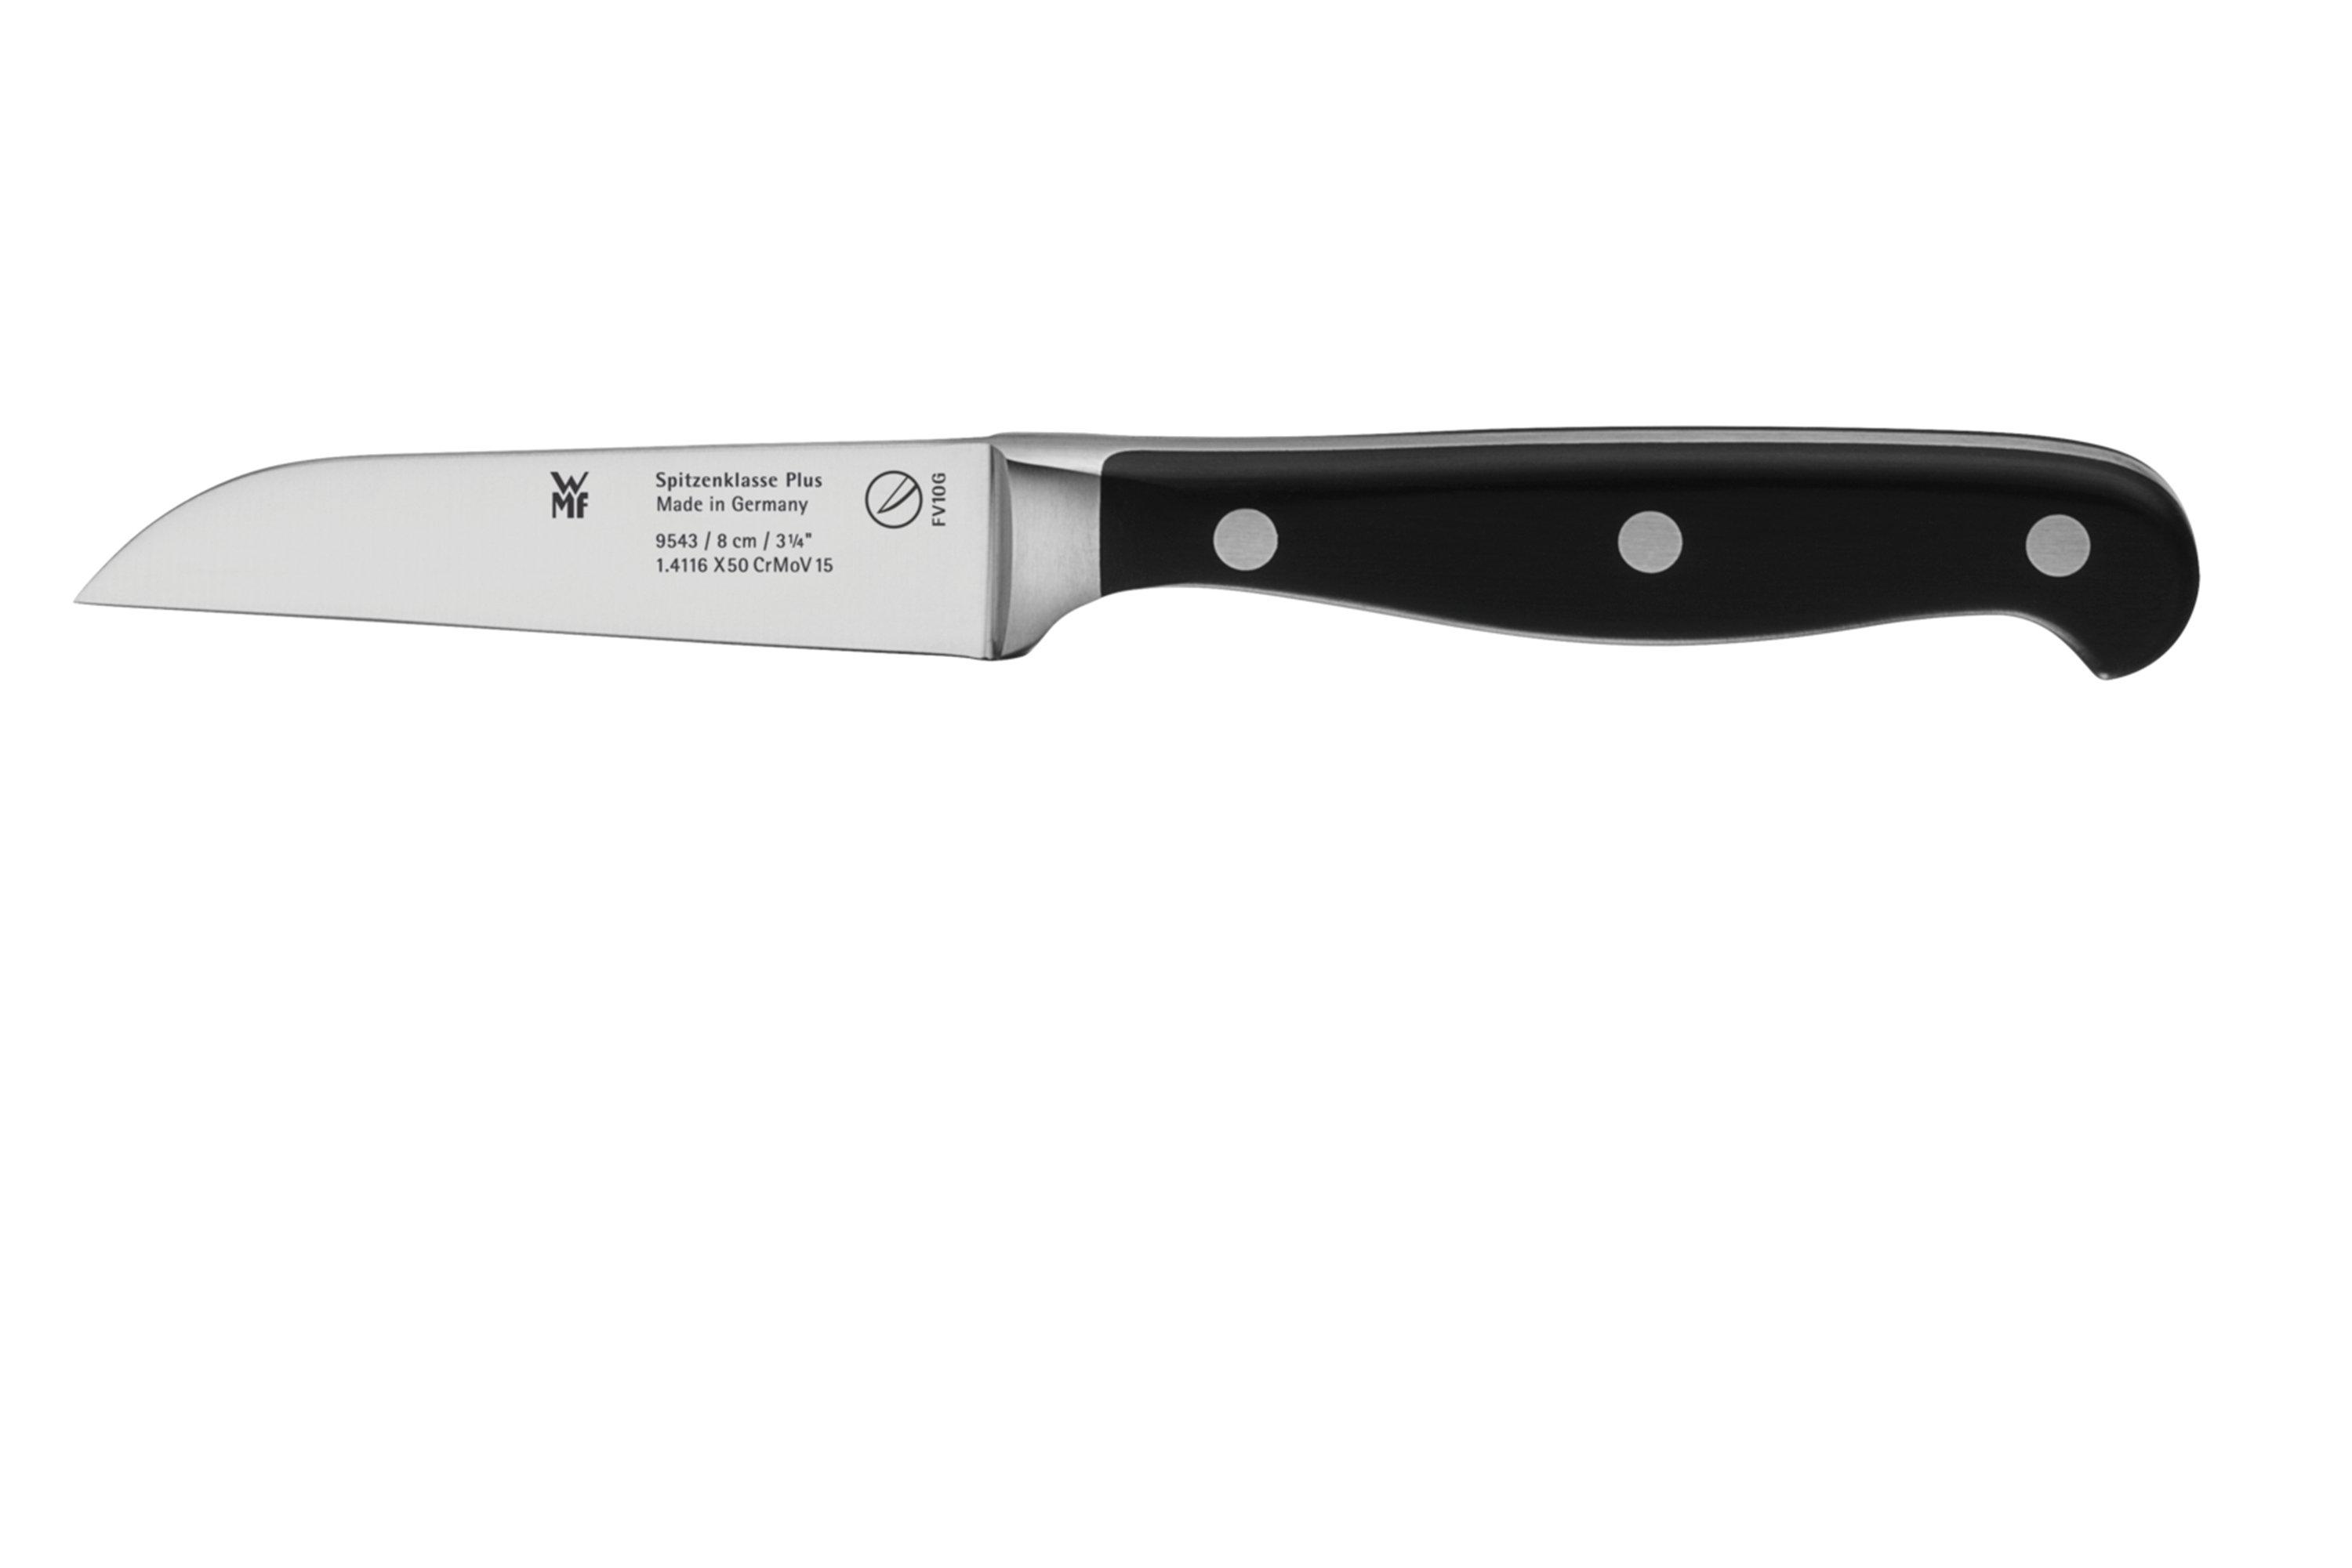 WMF Spitzenklasse set shopping knife at | 1894919992, Advantageously 3-piece Plus